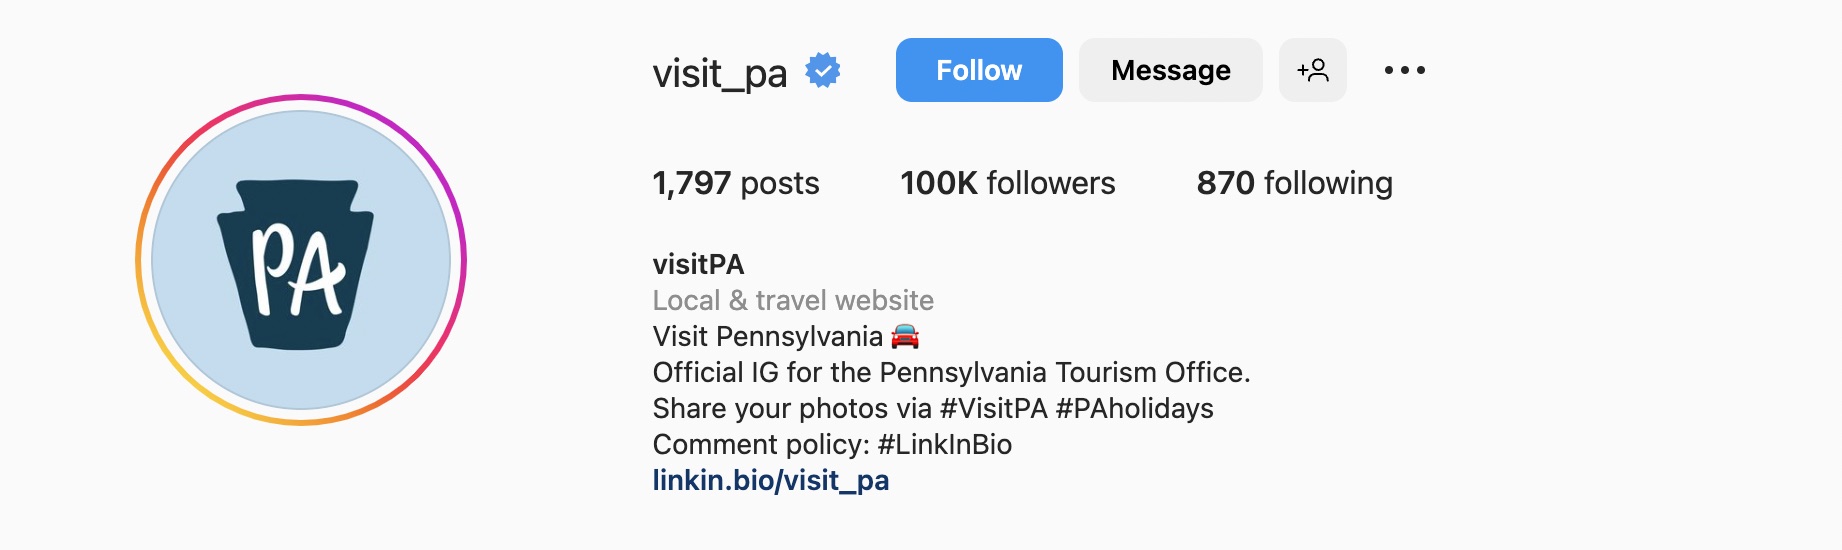 Good Instagram bio ideas for travel, visit pa